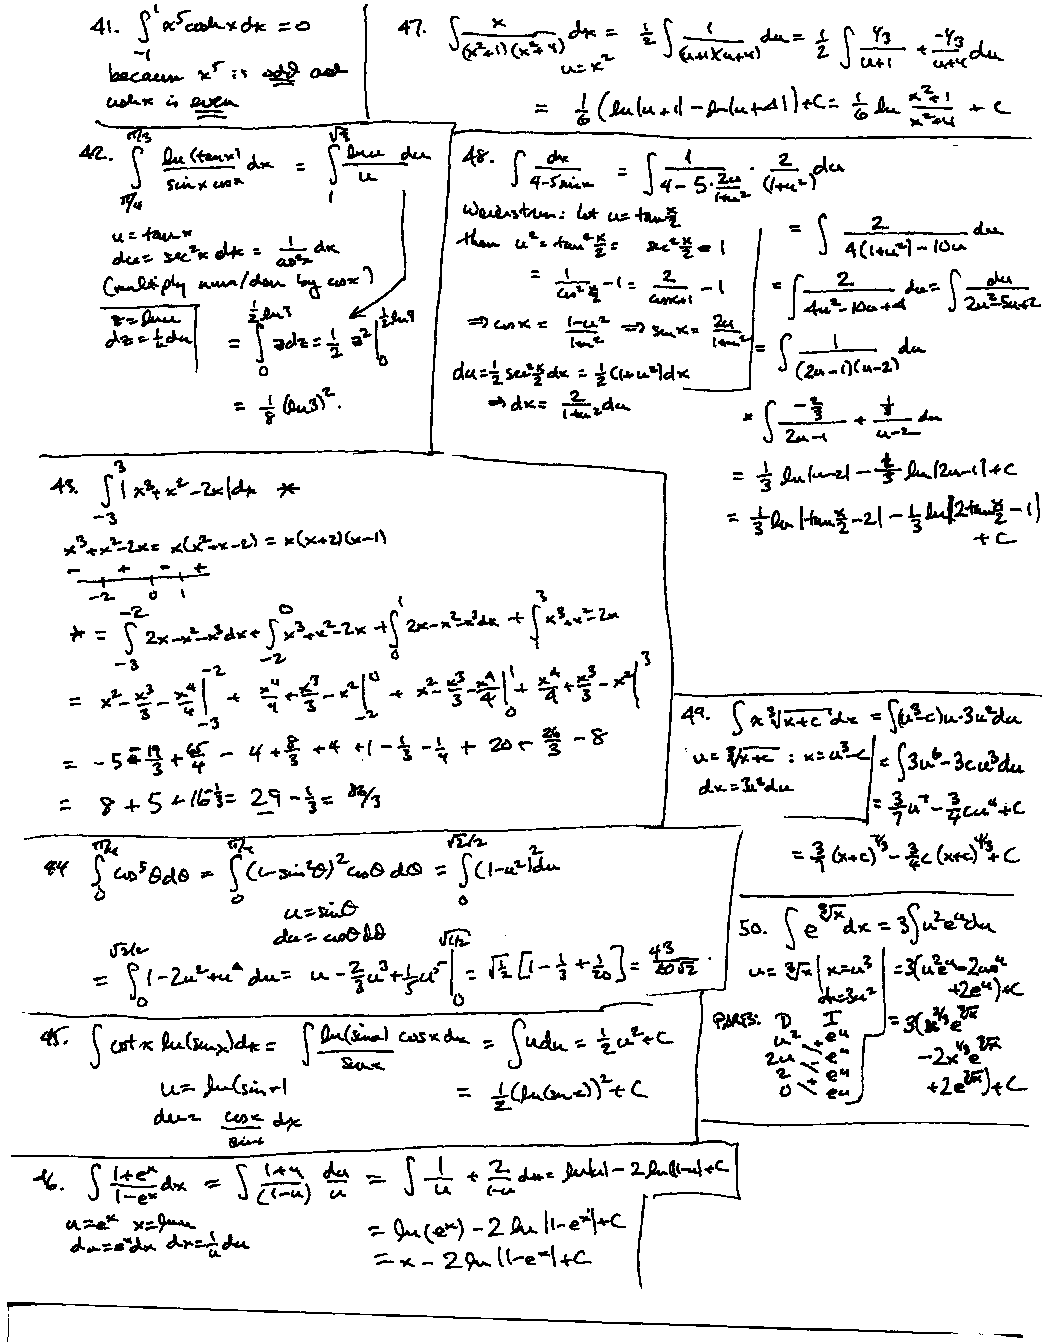 My math lab homework answers